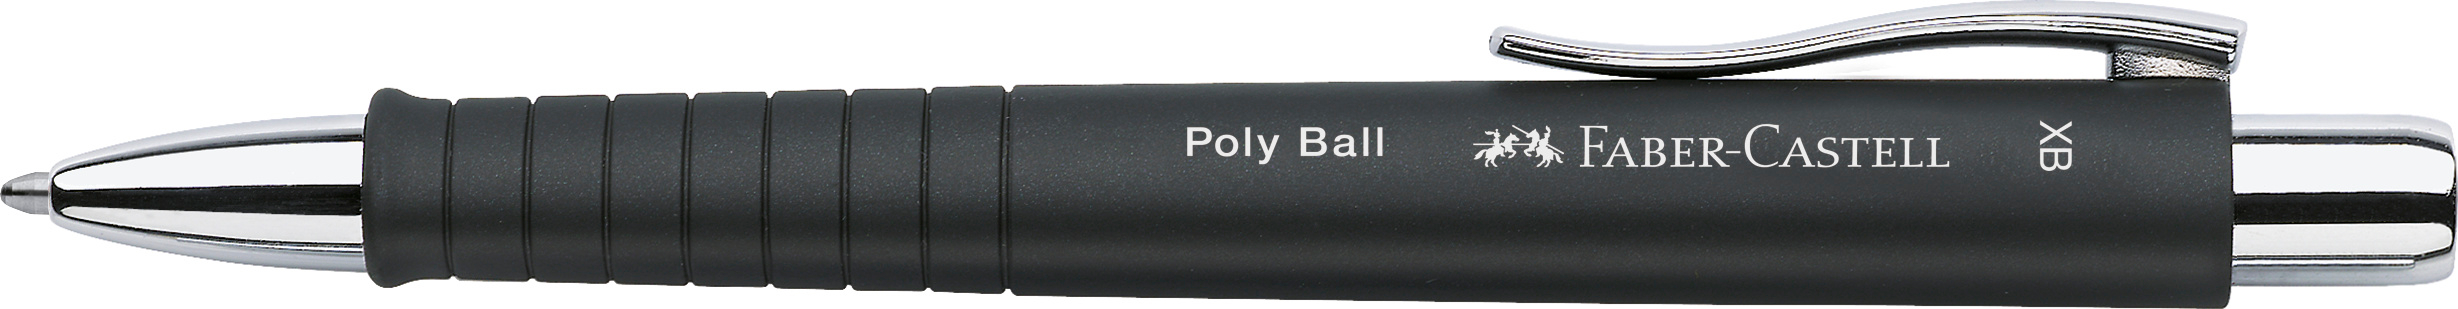 FABER-CASTELL Stylo à bille Poly Ball XB 241153 black